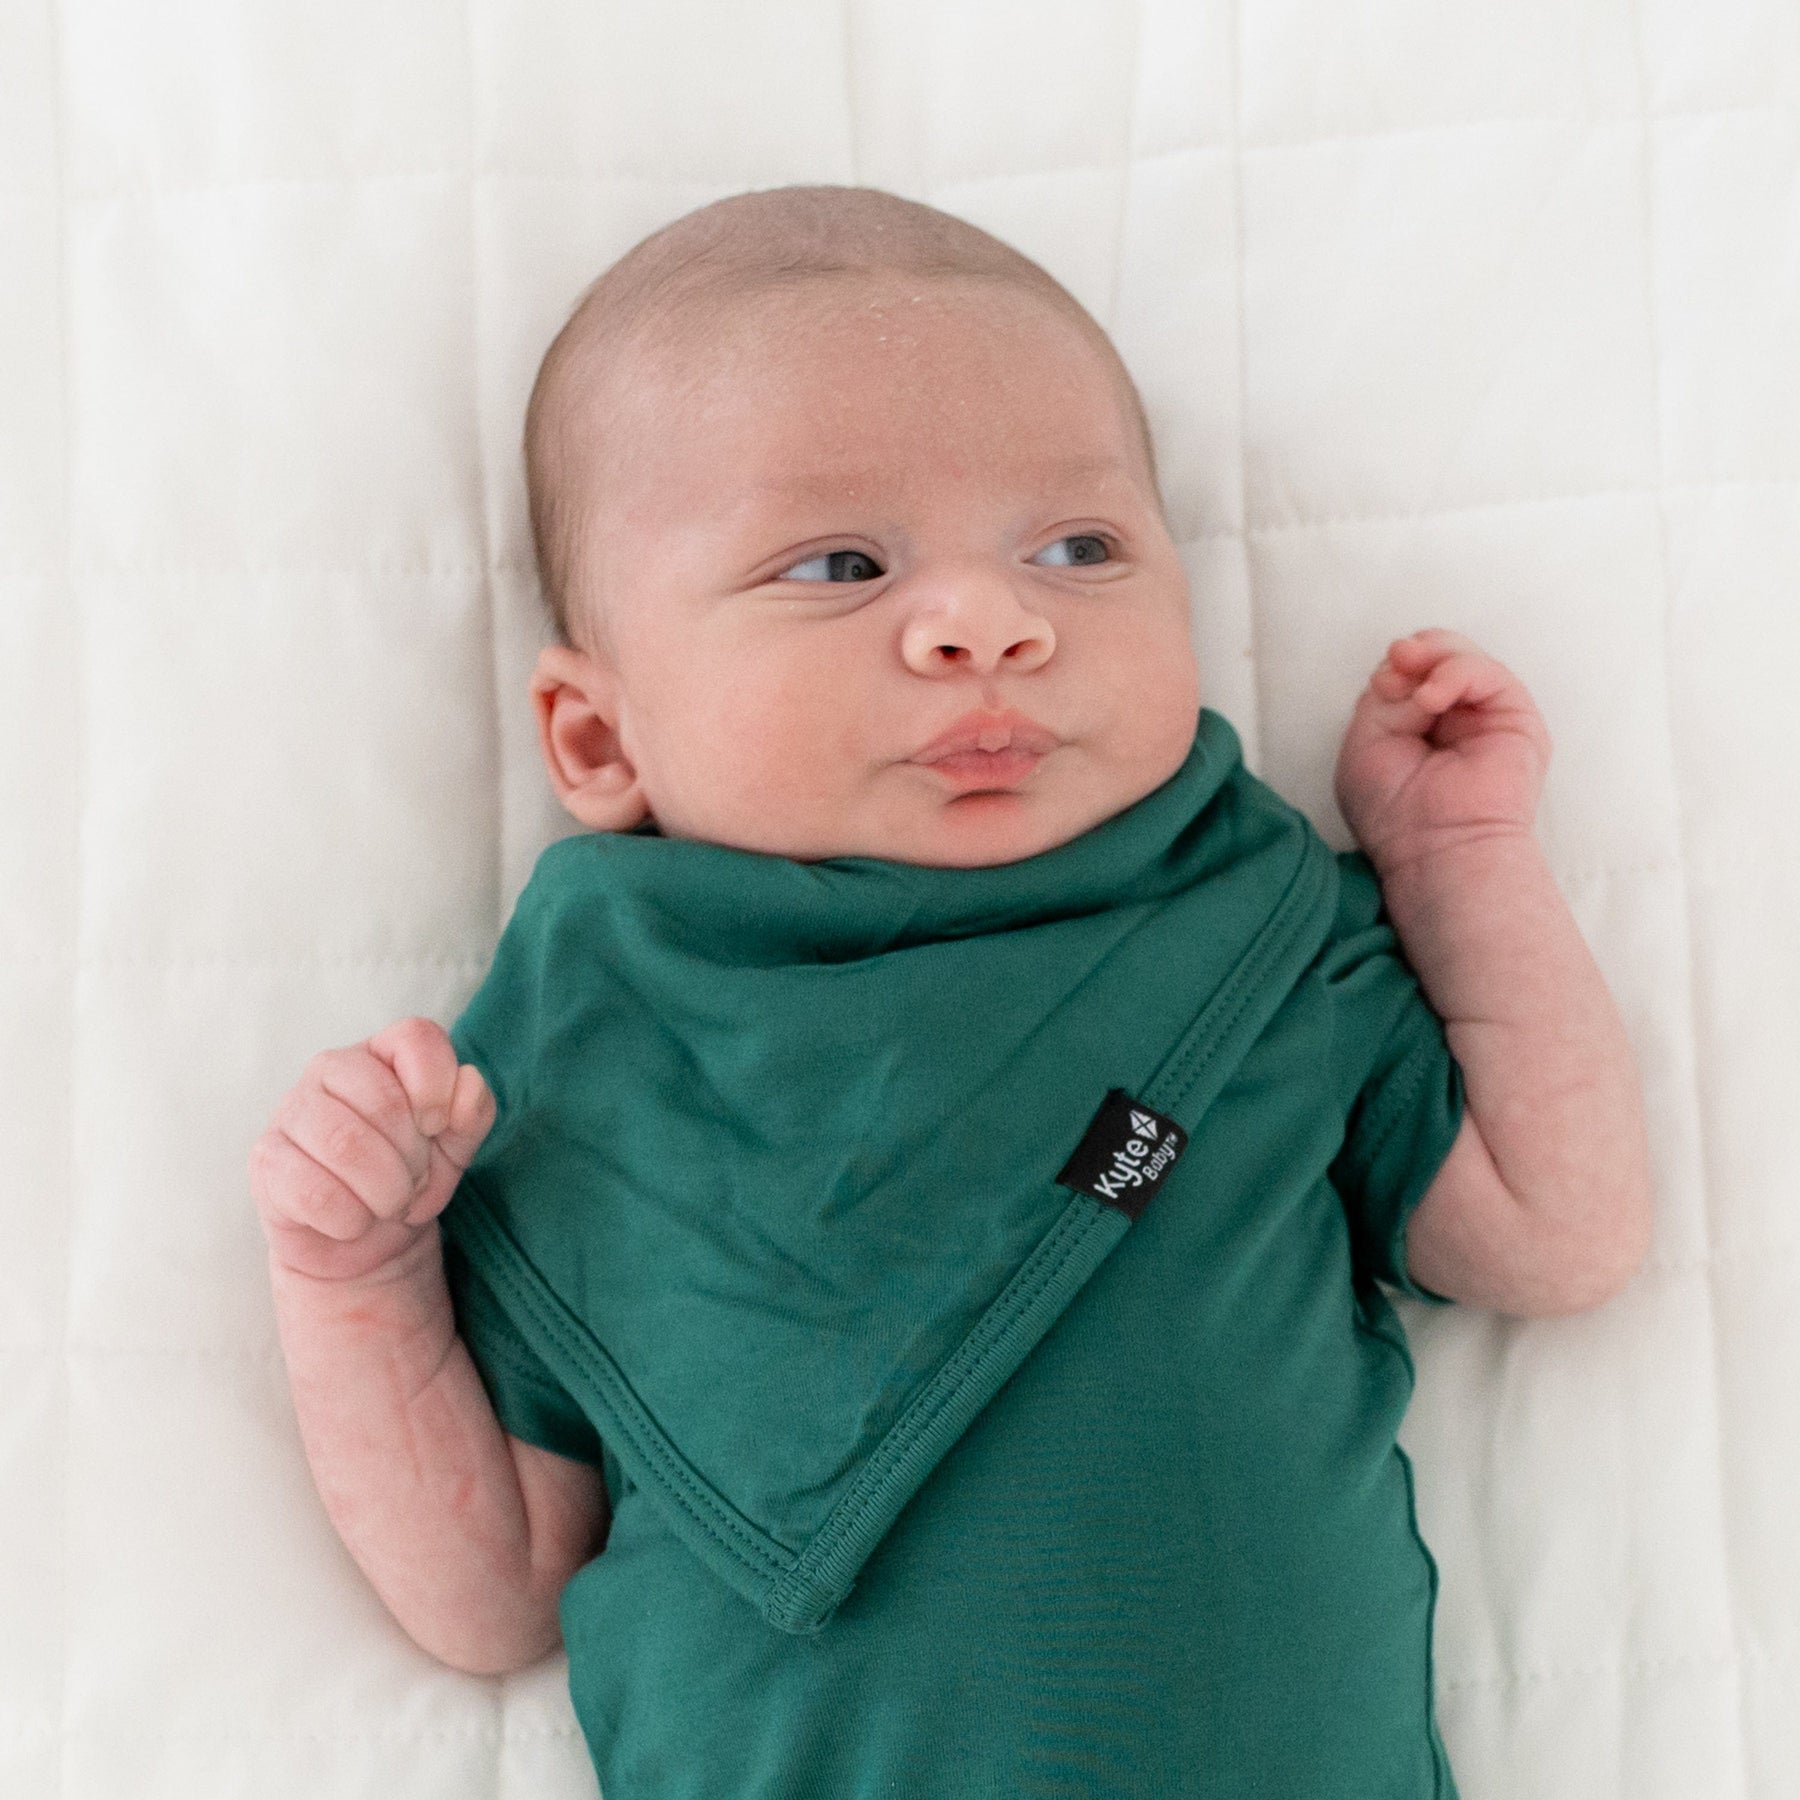 Infant wearing Kyte Baby short sleeve Bodysuit in Emerald